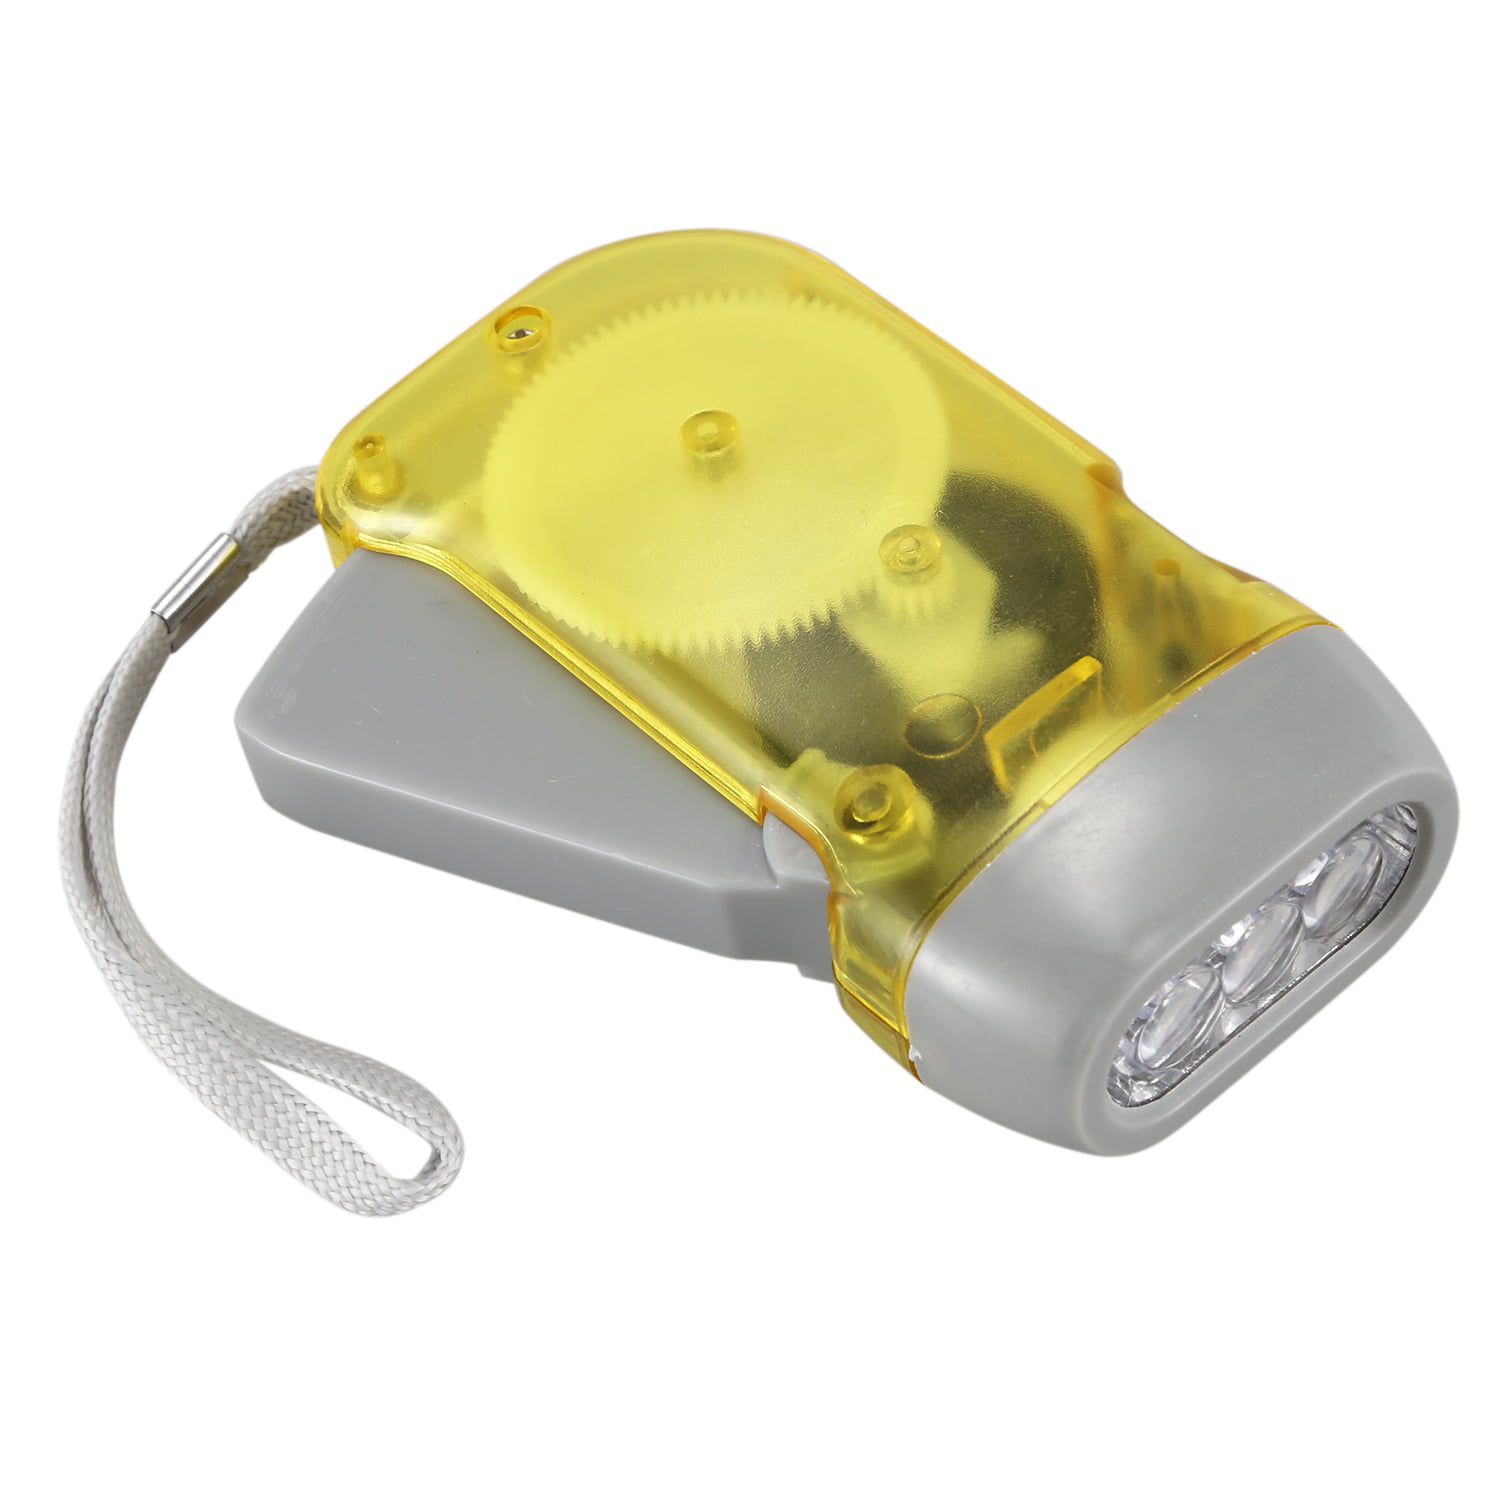 3 LED Dynamo Wind Up Flashlight Torch Light Hand Press Crank NR Camping#HCMA Z1 